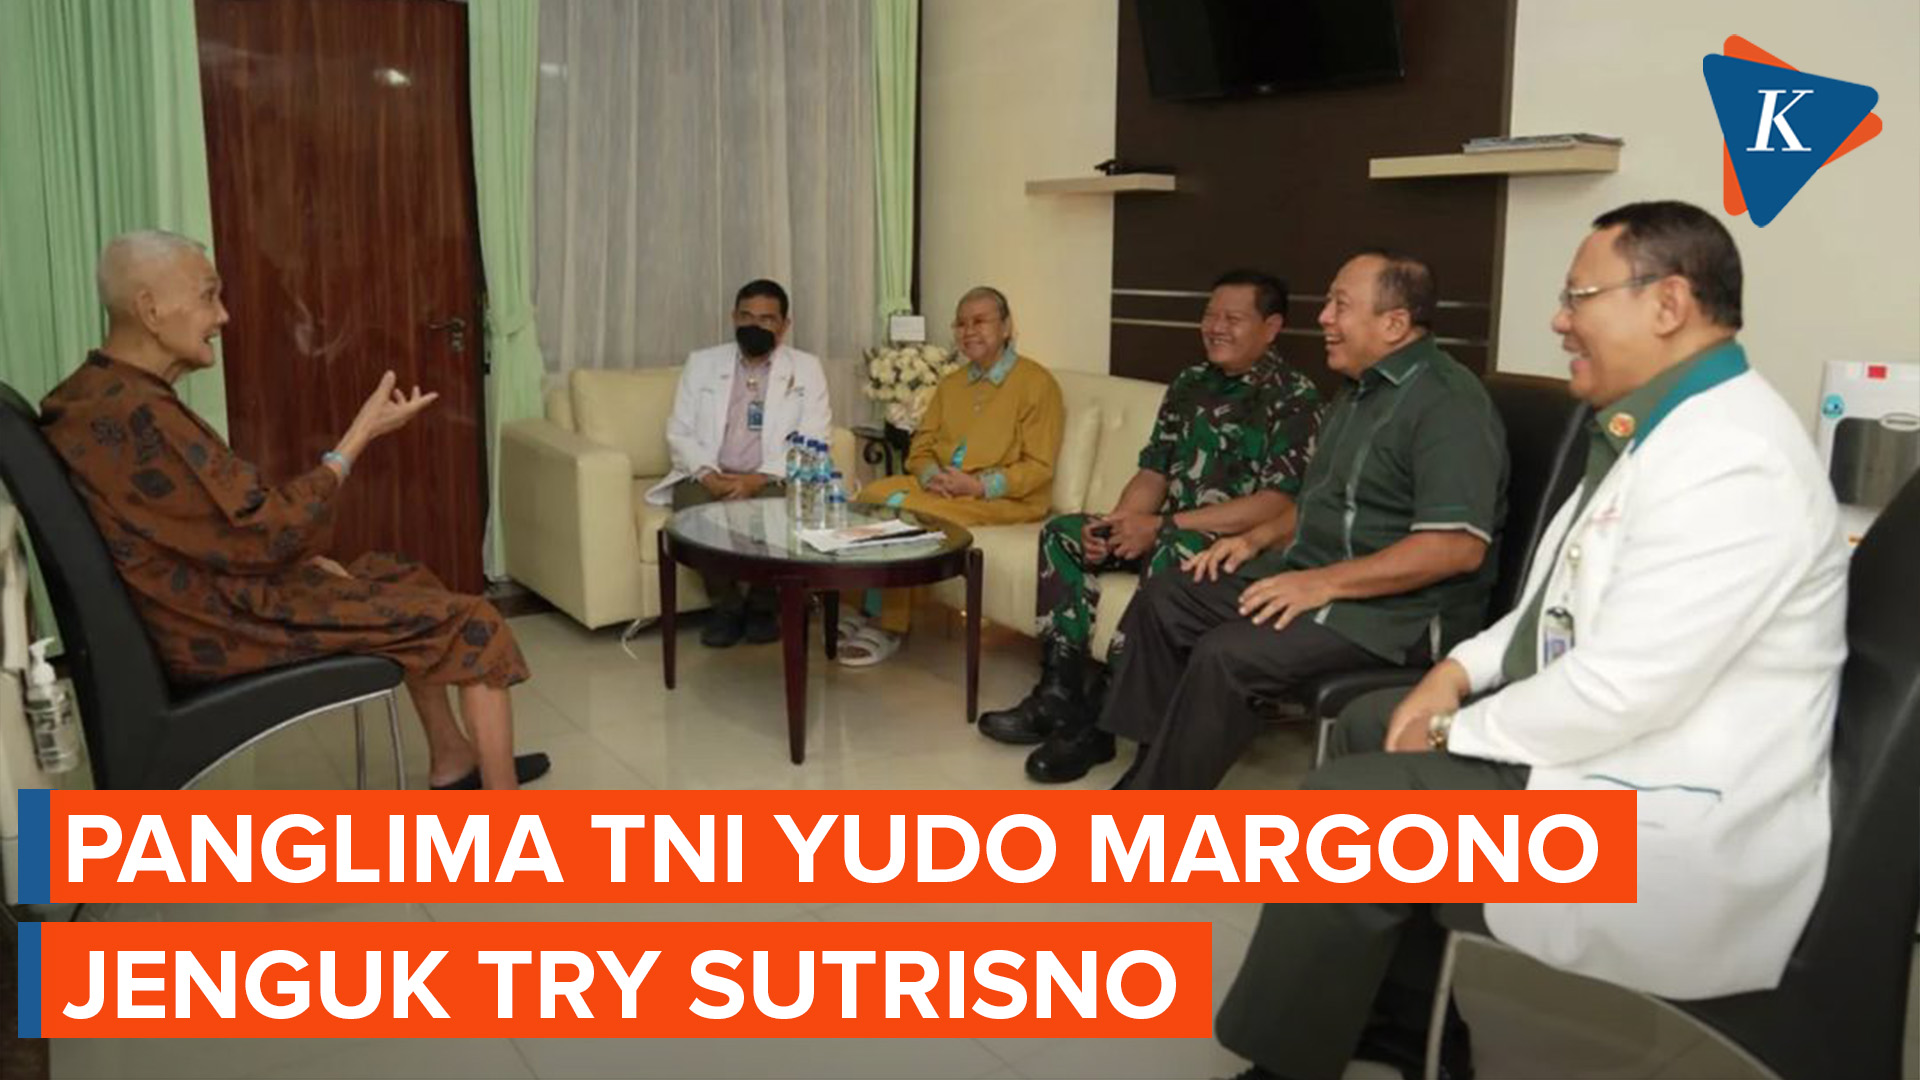 Dijenguk Panglima TNI Yudo Margono, Kondisi Try Sutrisno Membaik